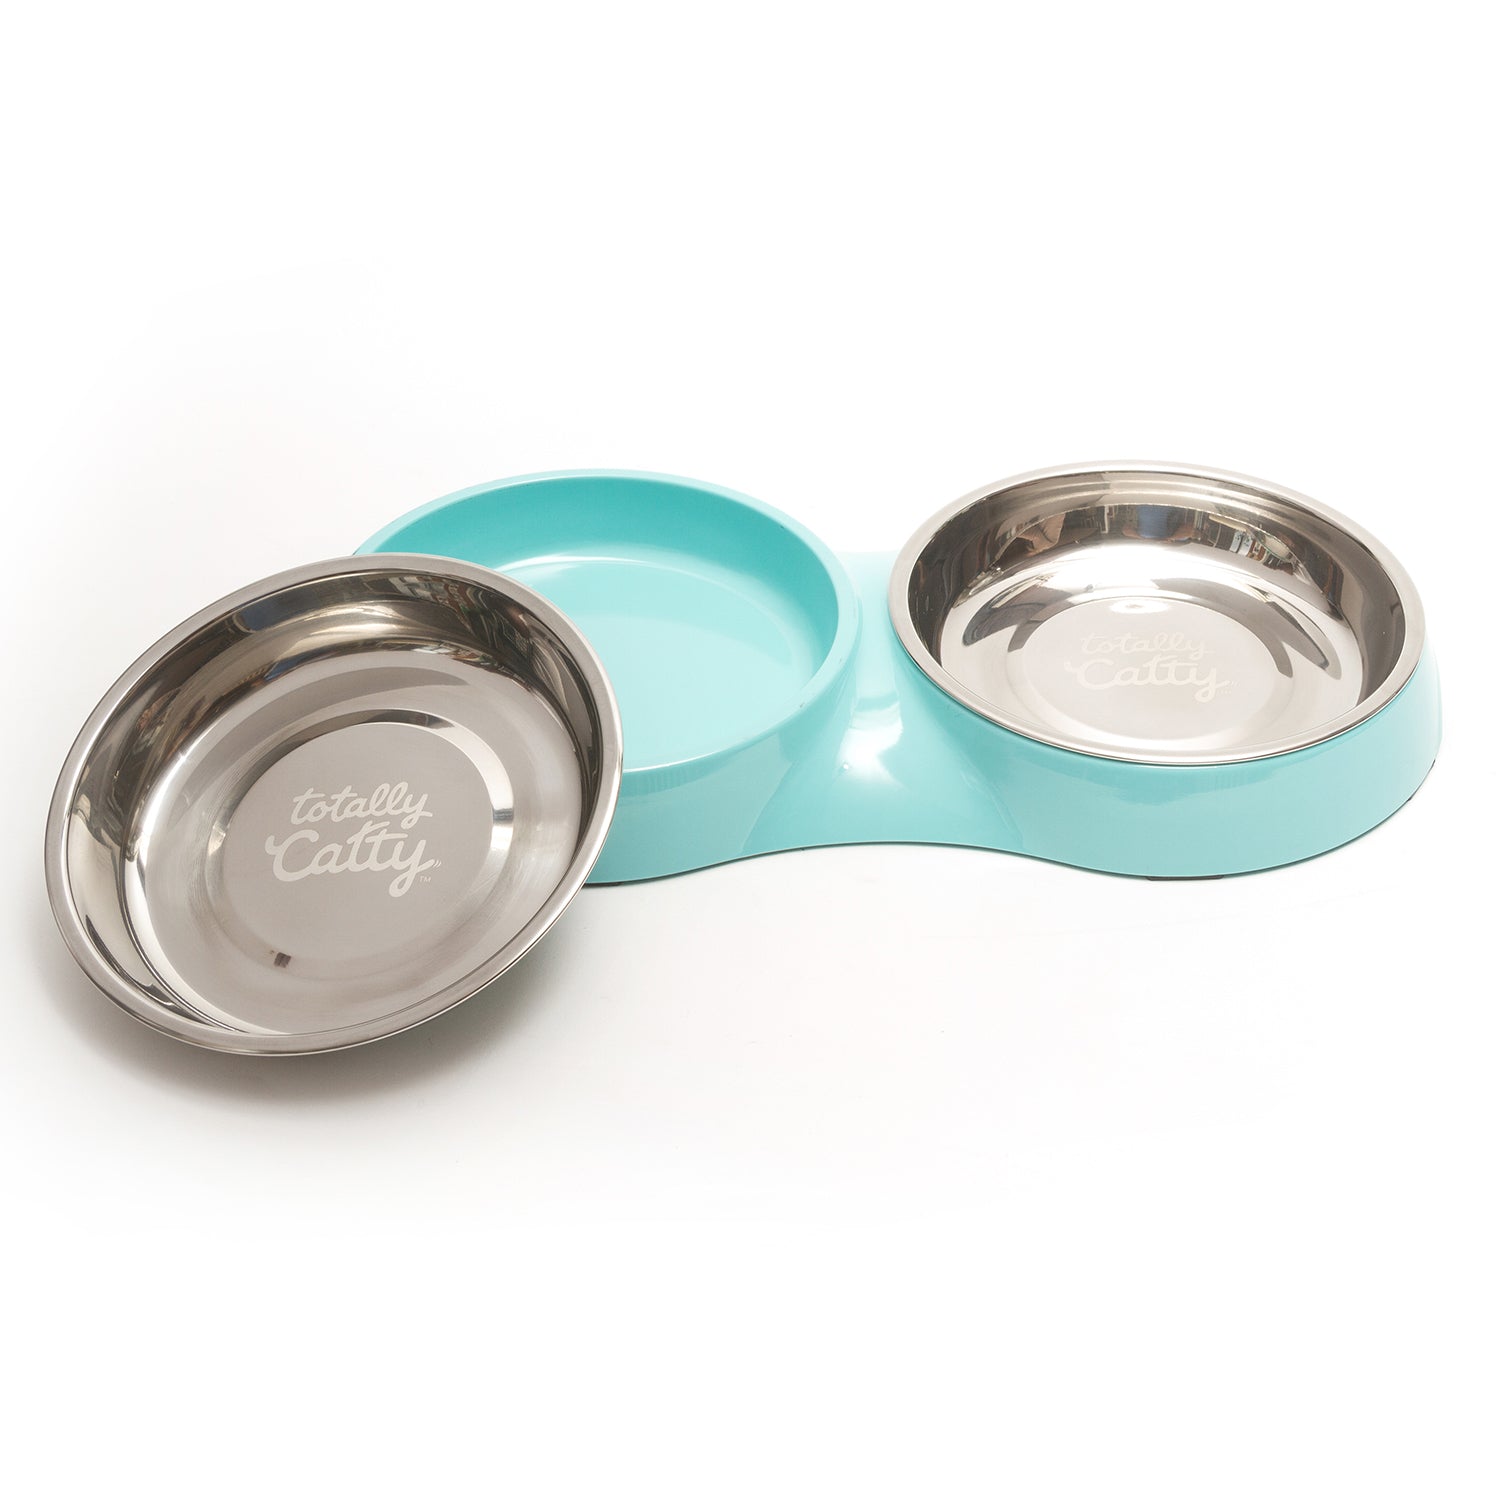 Teal cat feeder with removable dishwasher safe bowls. Saucer bowls to reduce whisker irritation. 